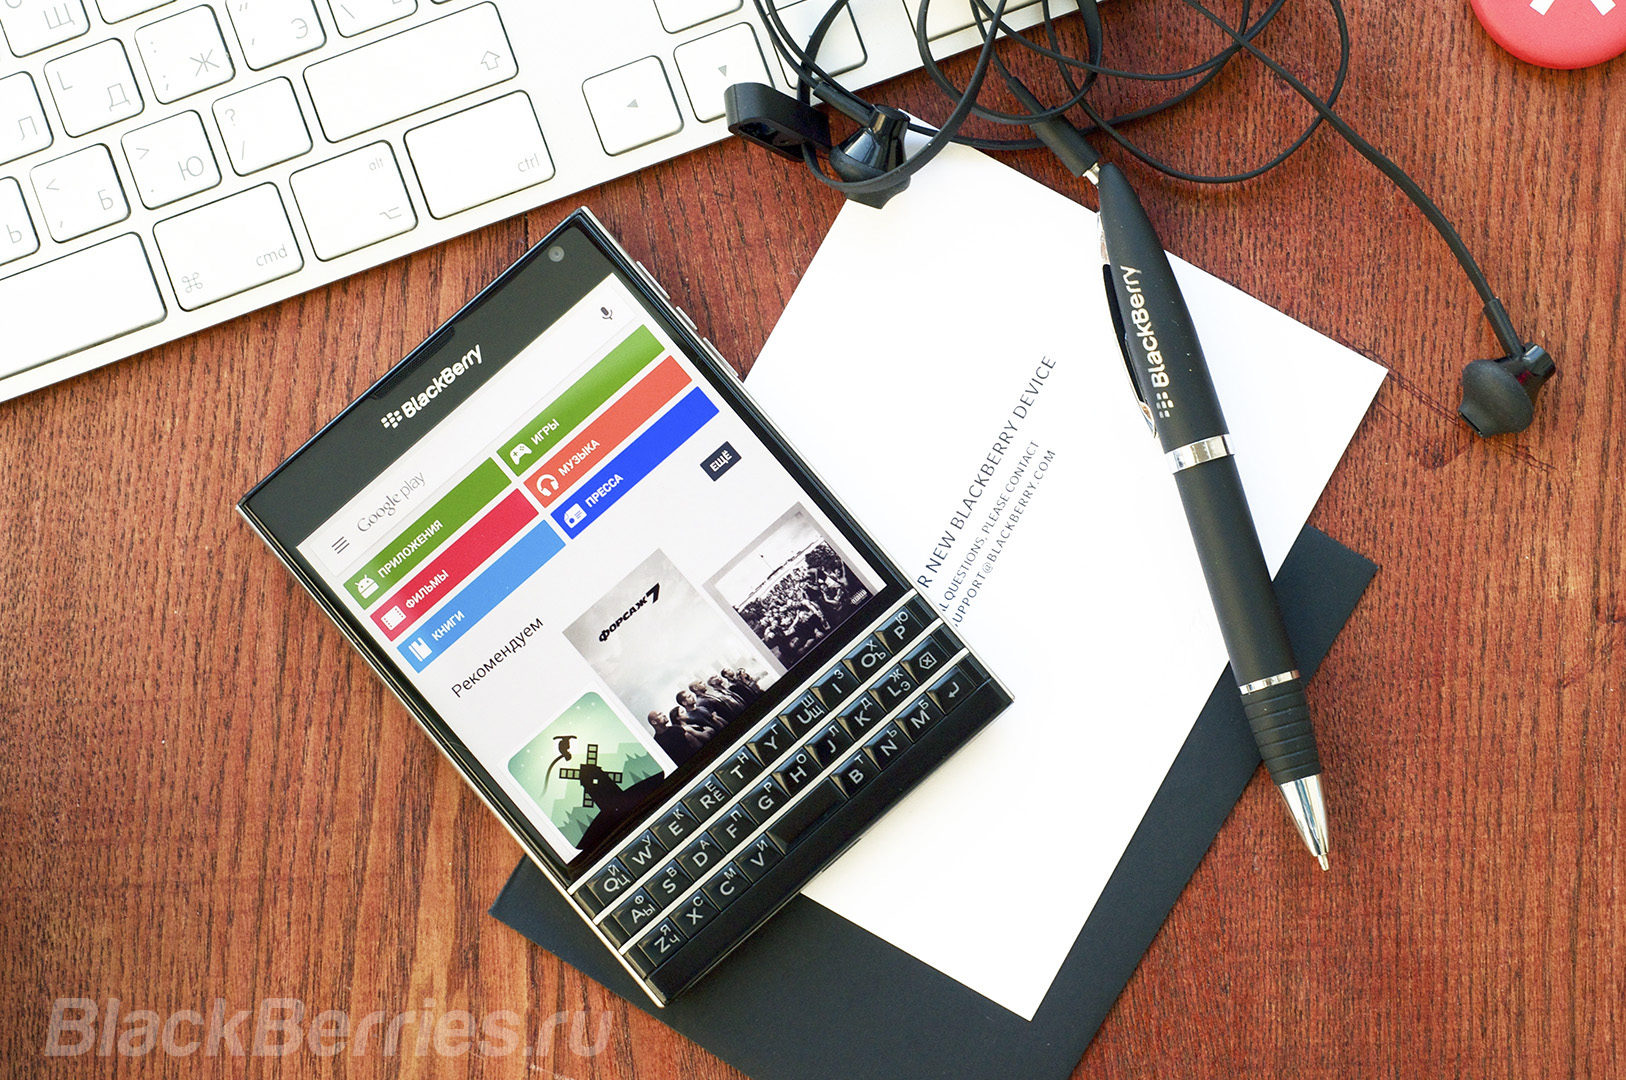 BlackBerry-Passport-Review-2016-33